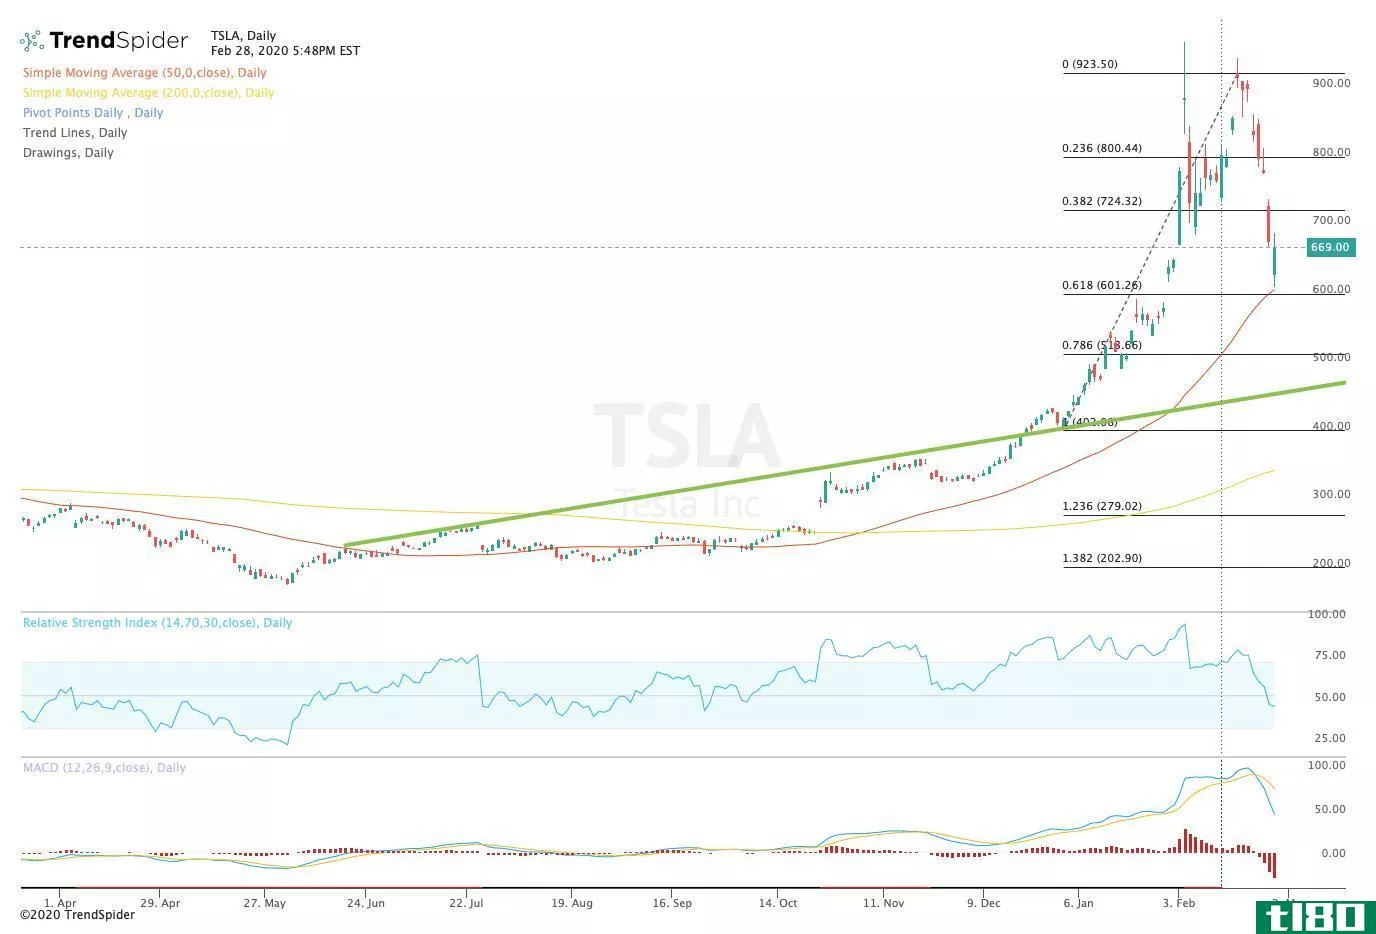 Chart showing the share price performance of Tesla, Inc. (TSLA)